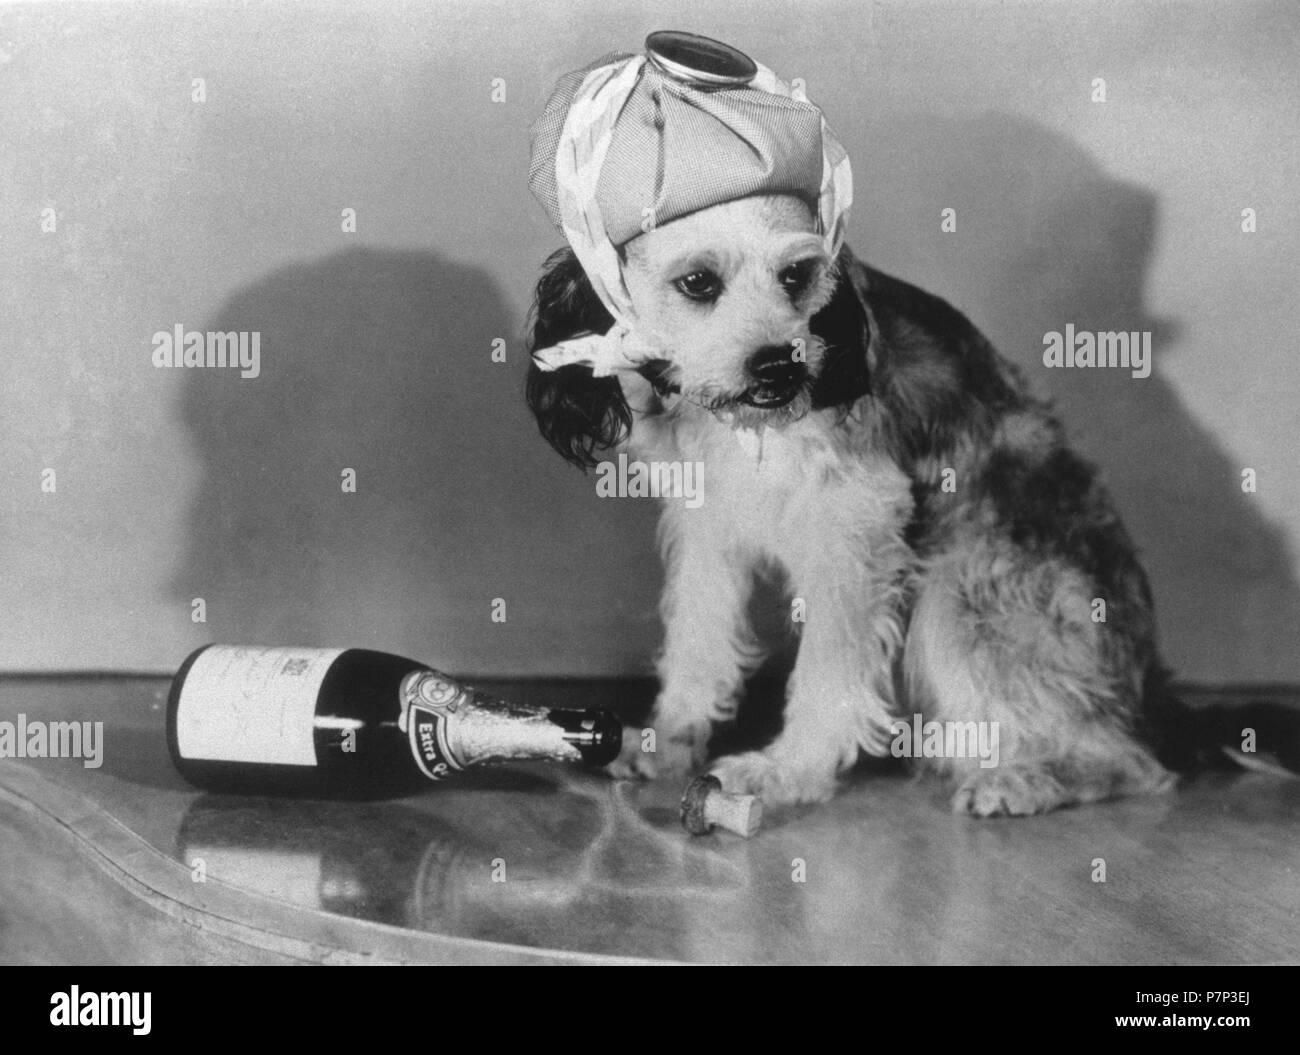 Hund krank mit leeren Flasche Sekt, Ca. 1950, genaue Ort unbekannt, Kuba, Karibik, Zentralamerika Stockfoto